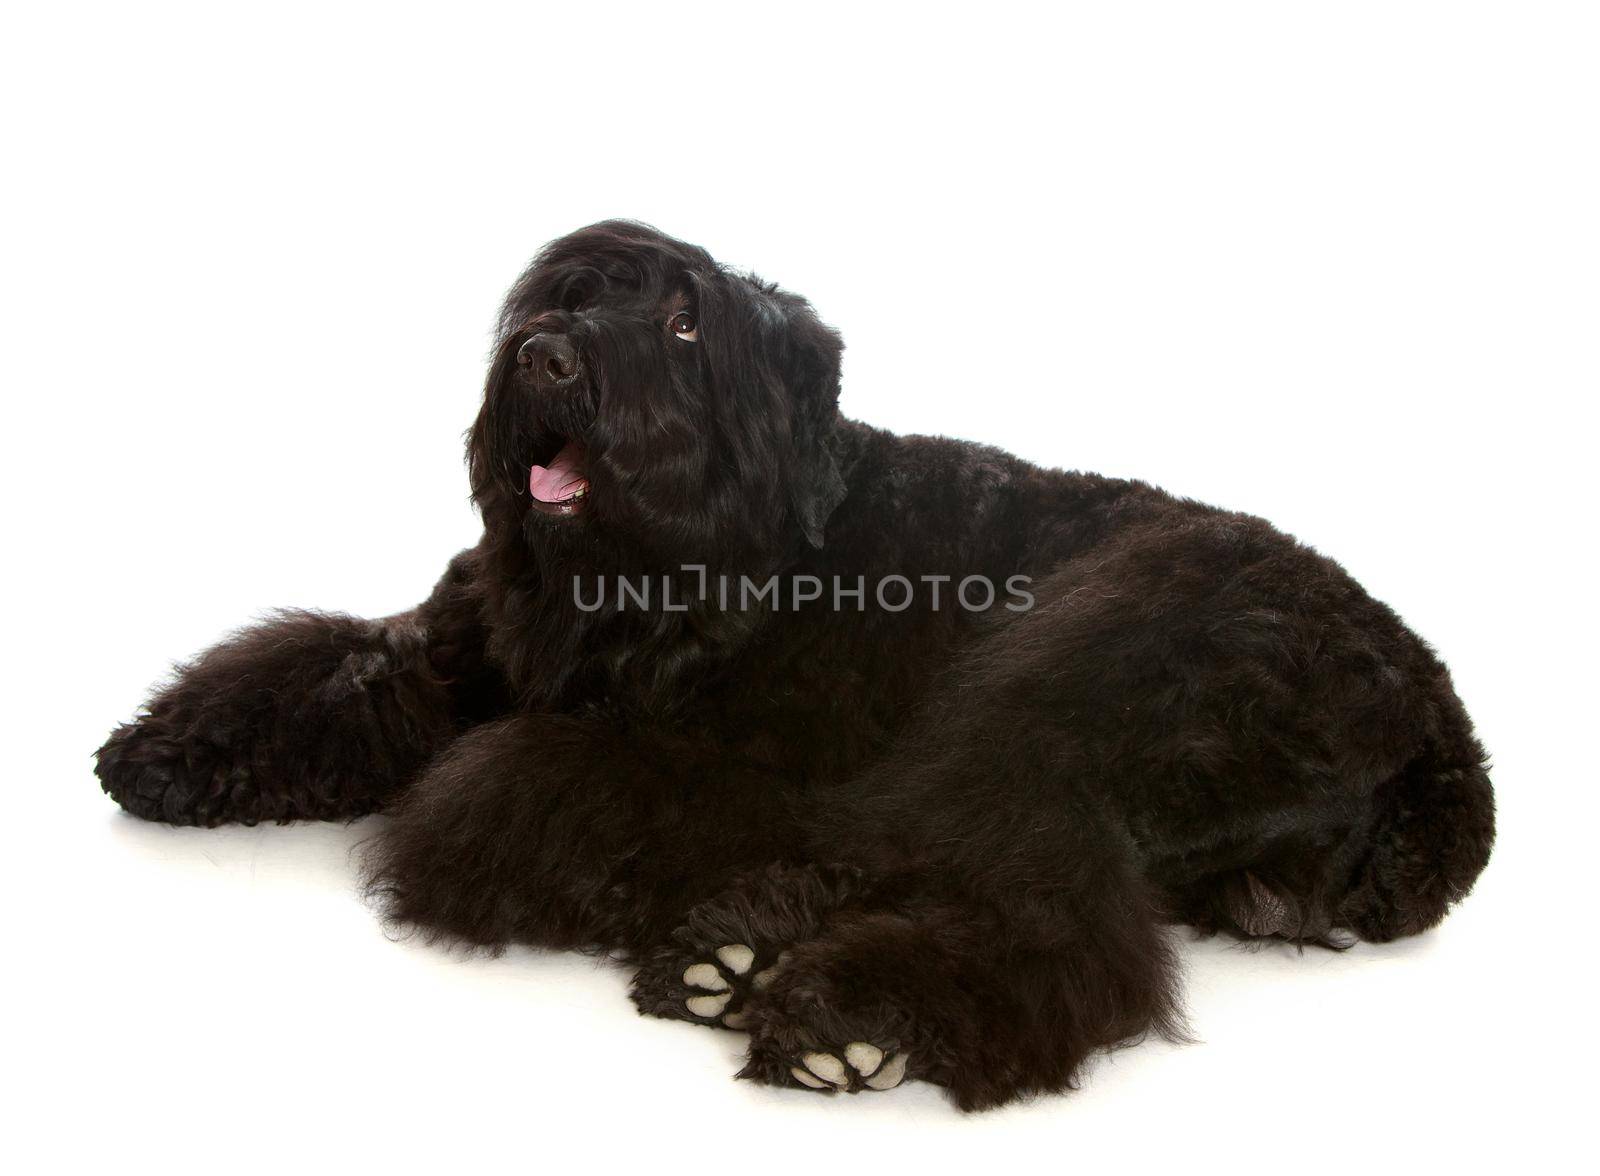 Large black shaggy dog lying tired on the floor - Isolated on white background